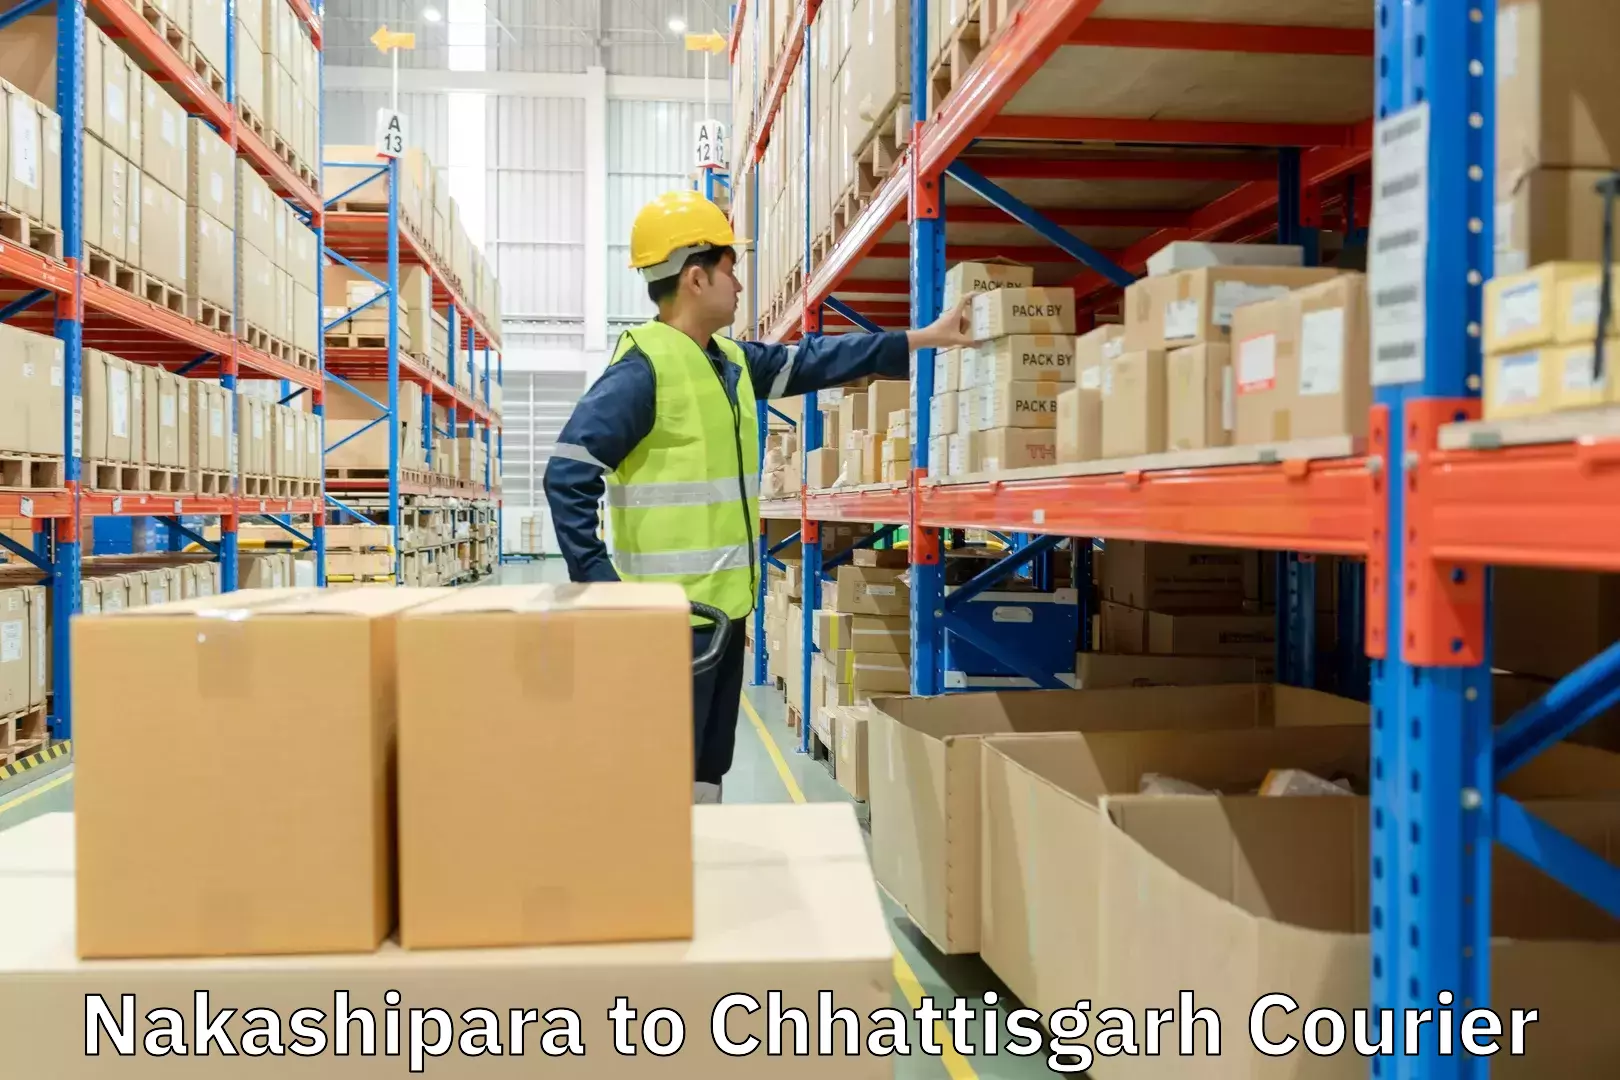 Express delivery network Nakashipara to Chhattisgarh